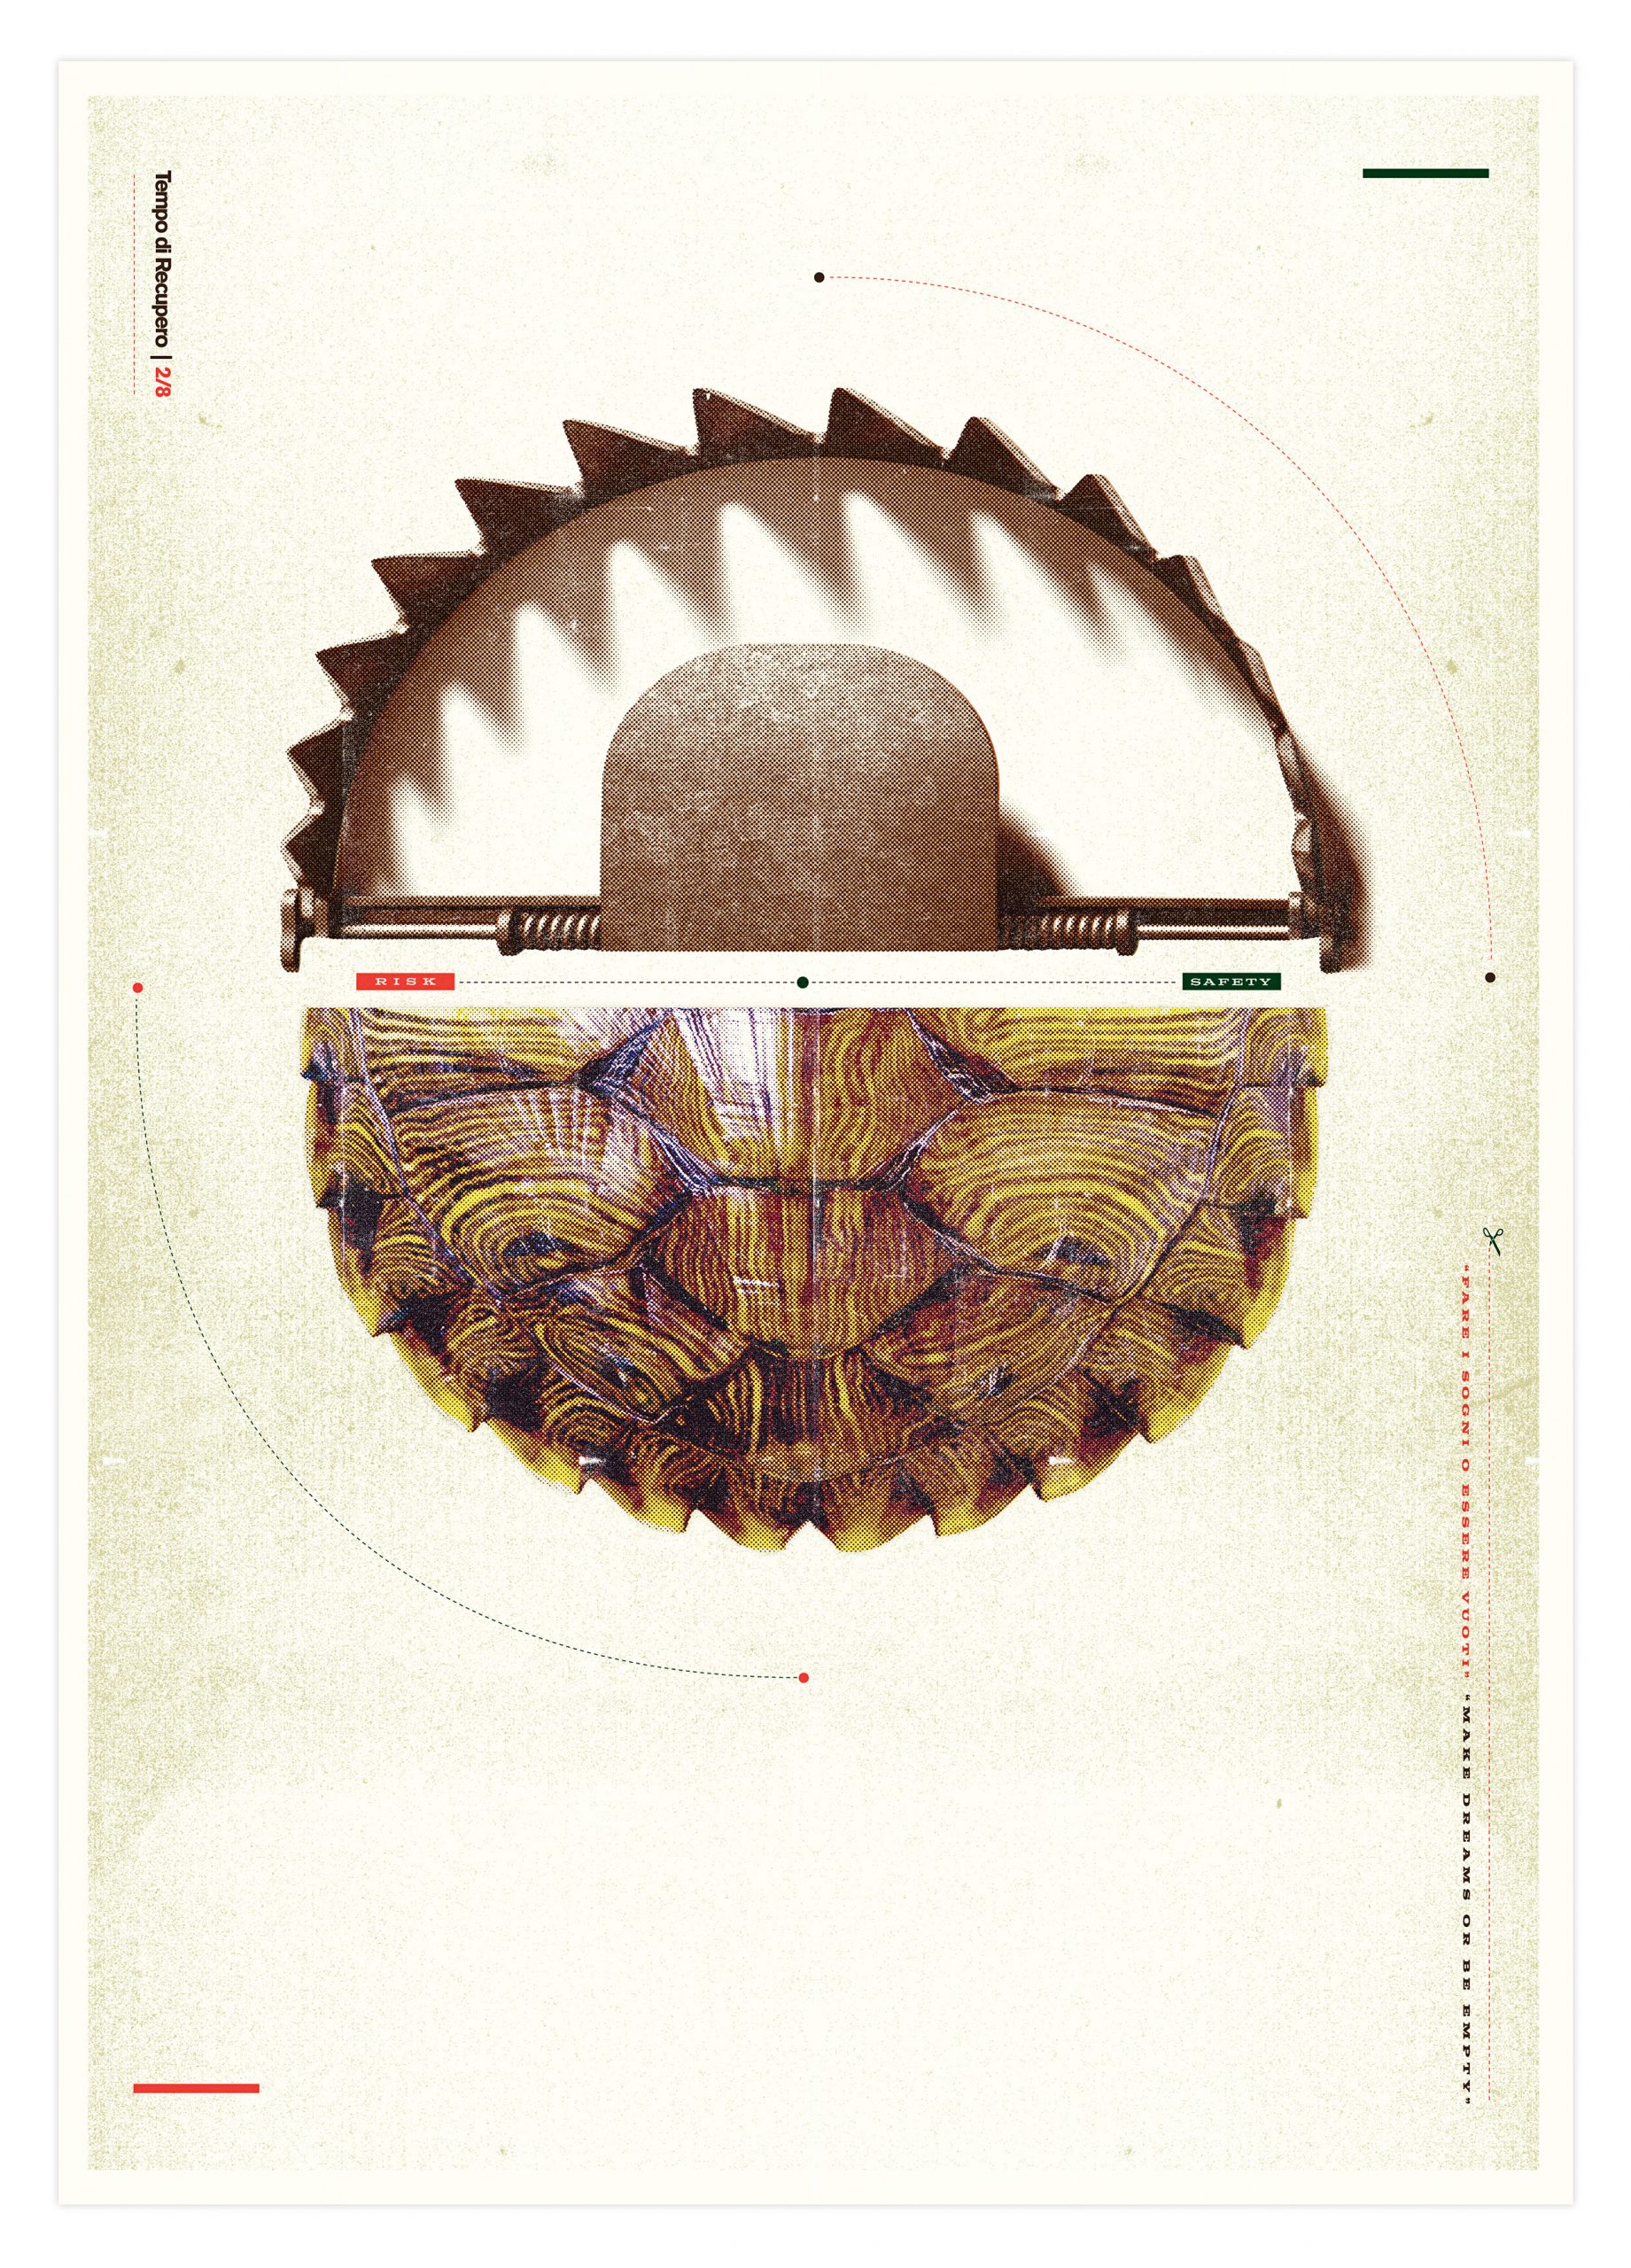 Jarred Elrod, Exhibition, Illustration, Graphic Design, Italy